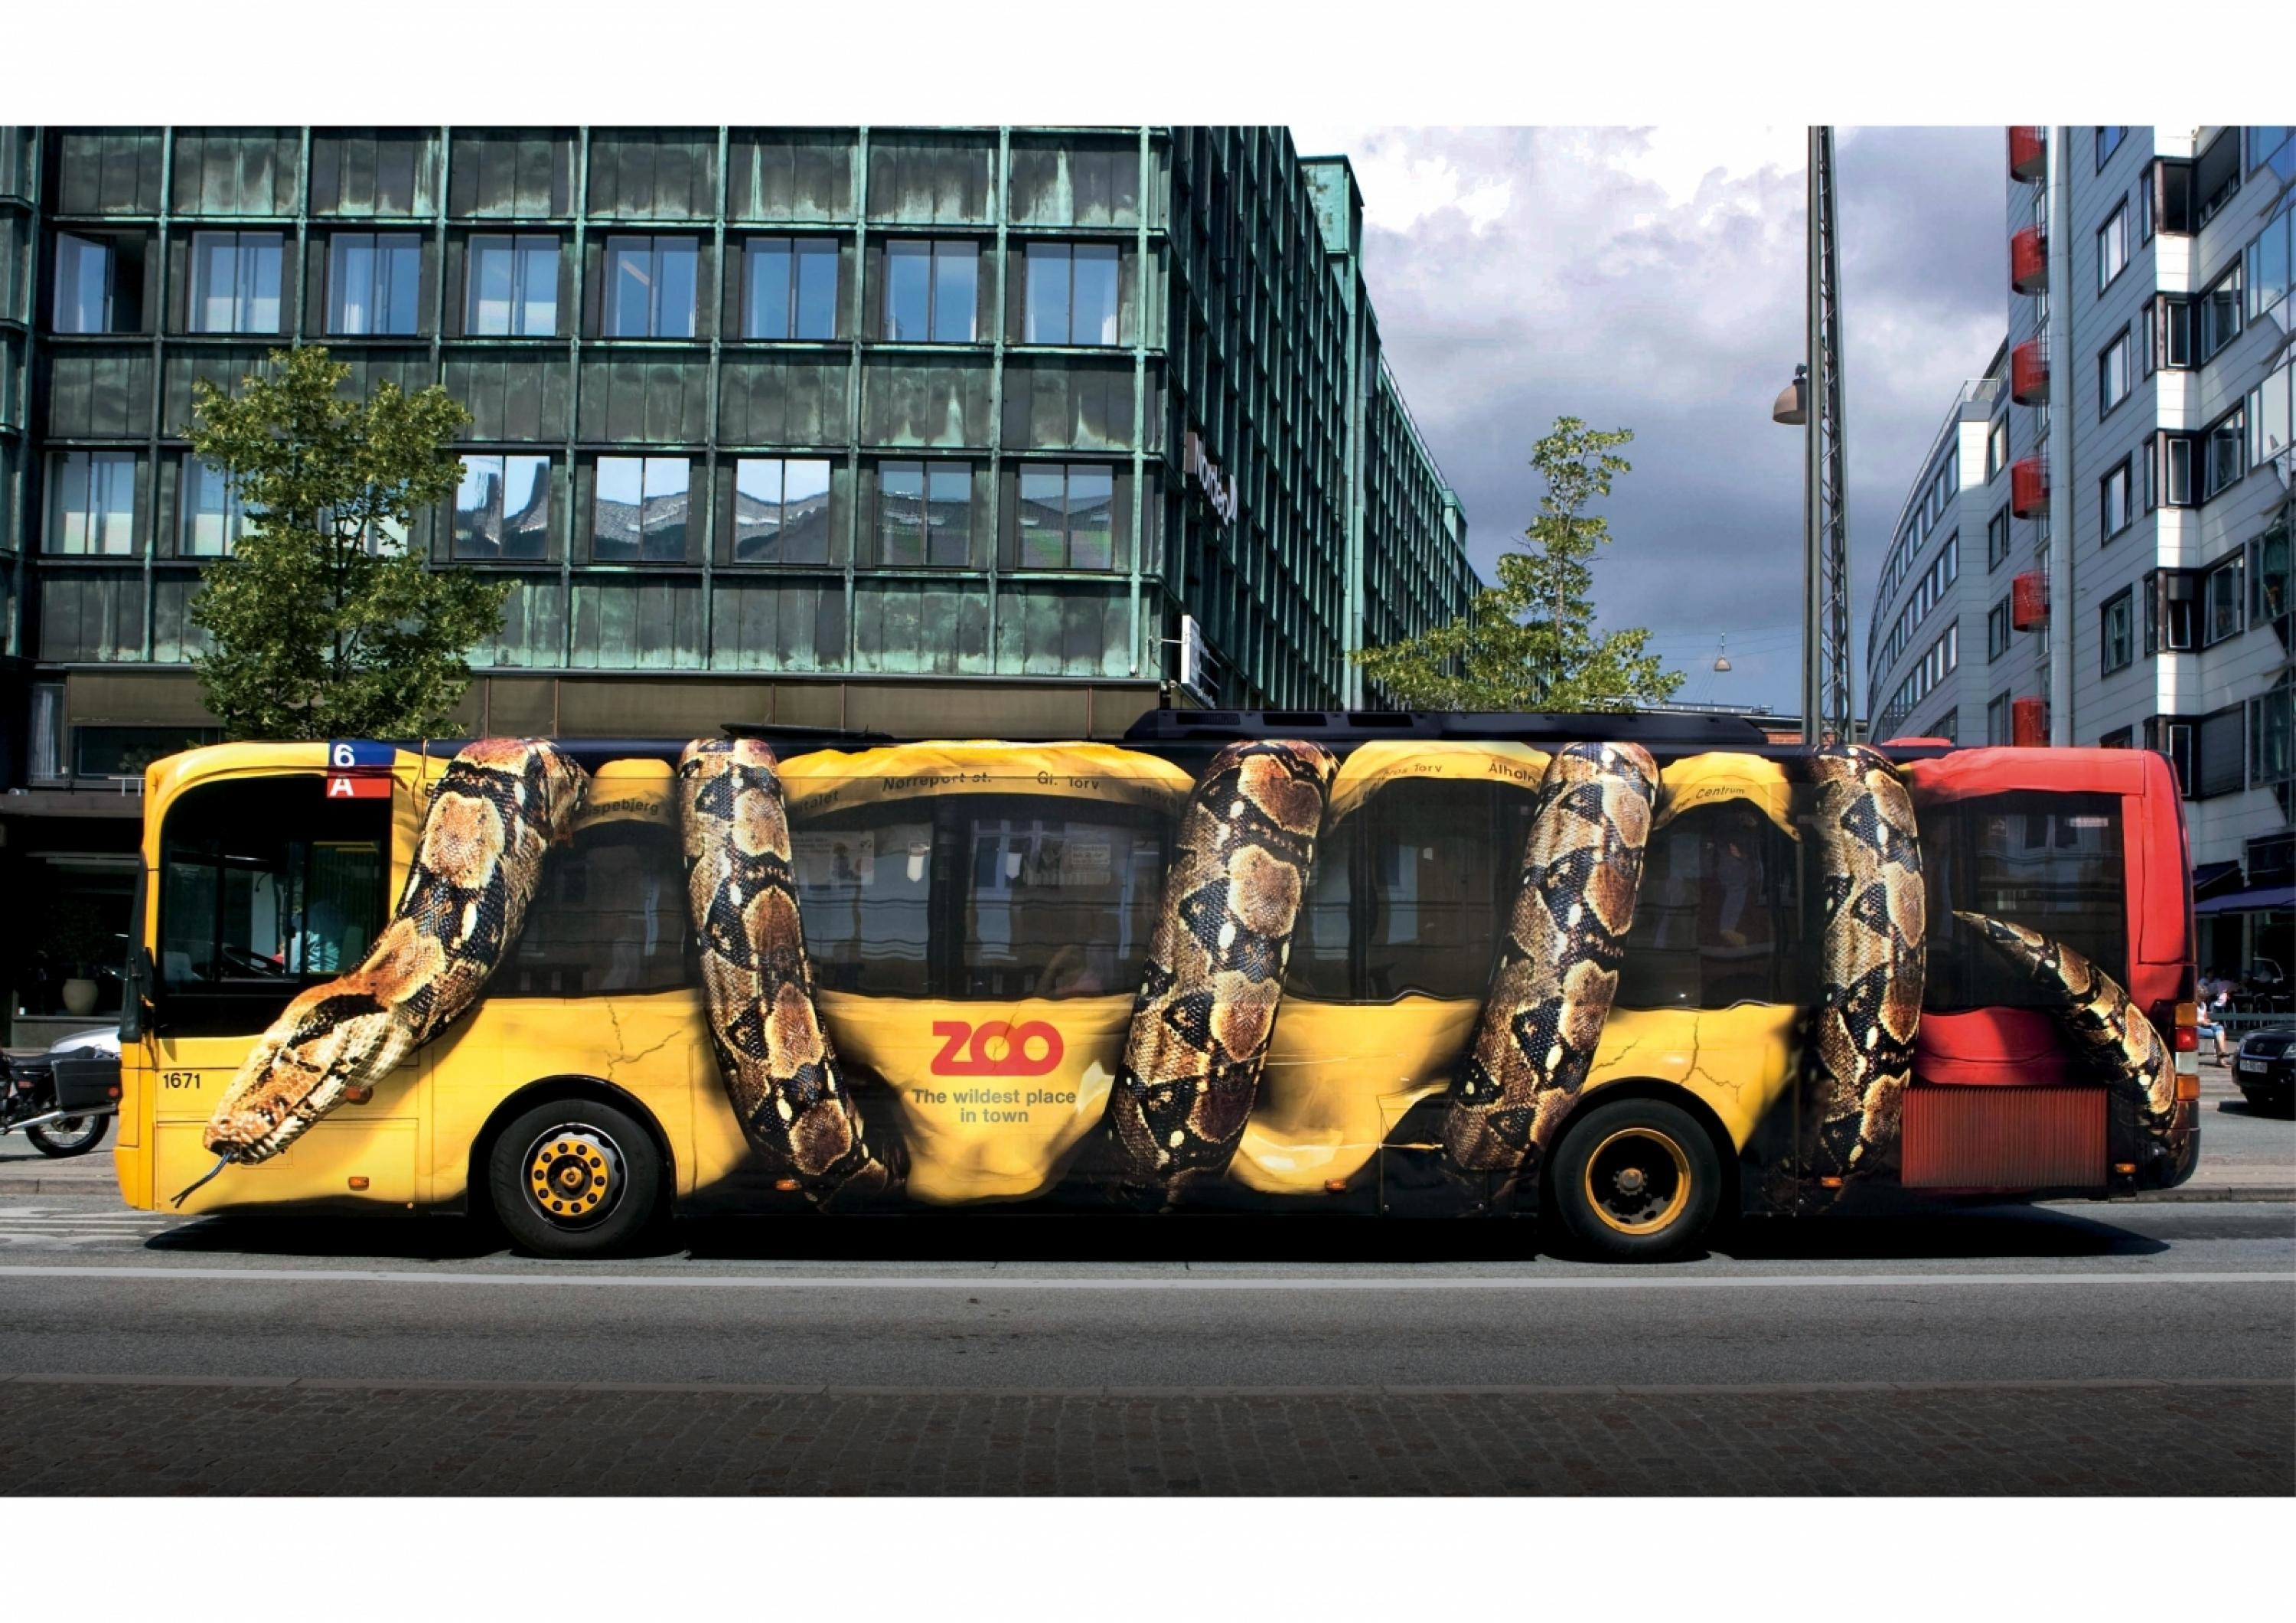 Можно на машине можно на автобусе. Реклама на транспорте. Транзитная реклама. Необычные автобусы. Необычная реклама на авто.